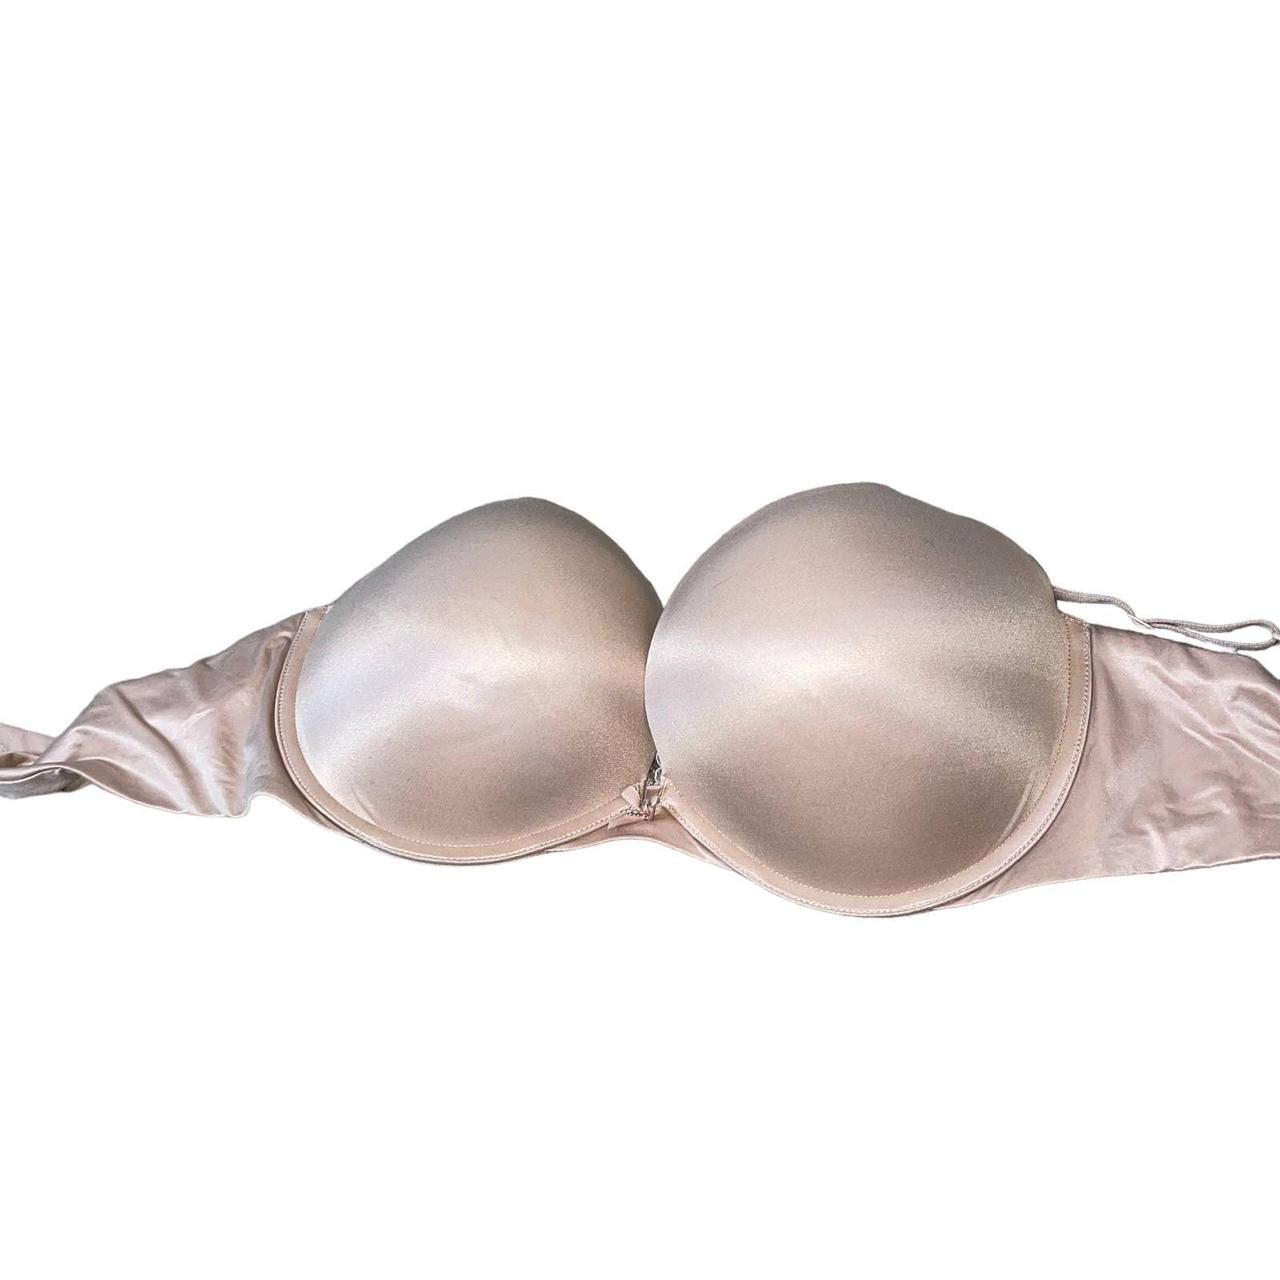 Sold at Auction: 3 Brand New Victoria's Secret Bras size 36 DDD 2- 36 DD